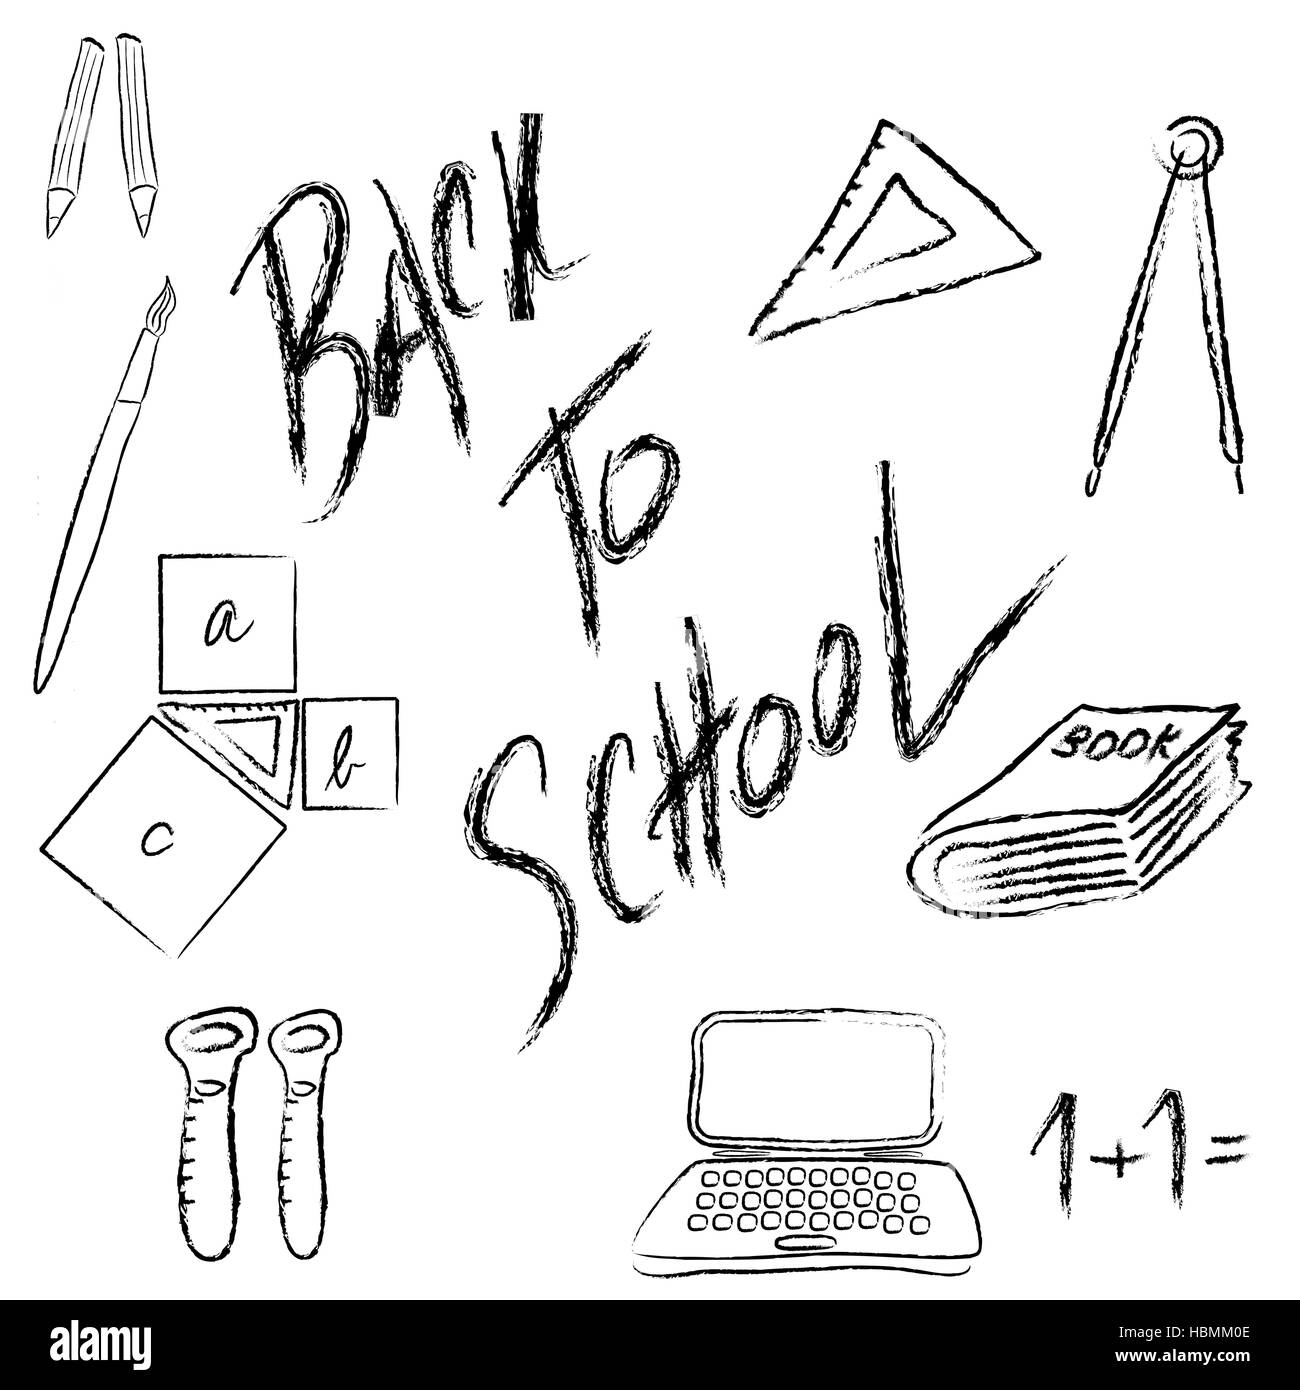 Zurück zu Schule-Versorgungsmaterialien - Hand-Drawn Vektor Illustration Design-Elemente - Vektor Stock Vektor